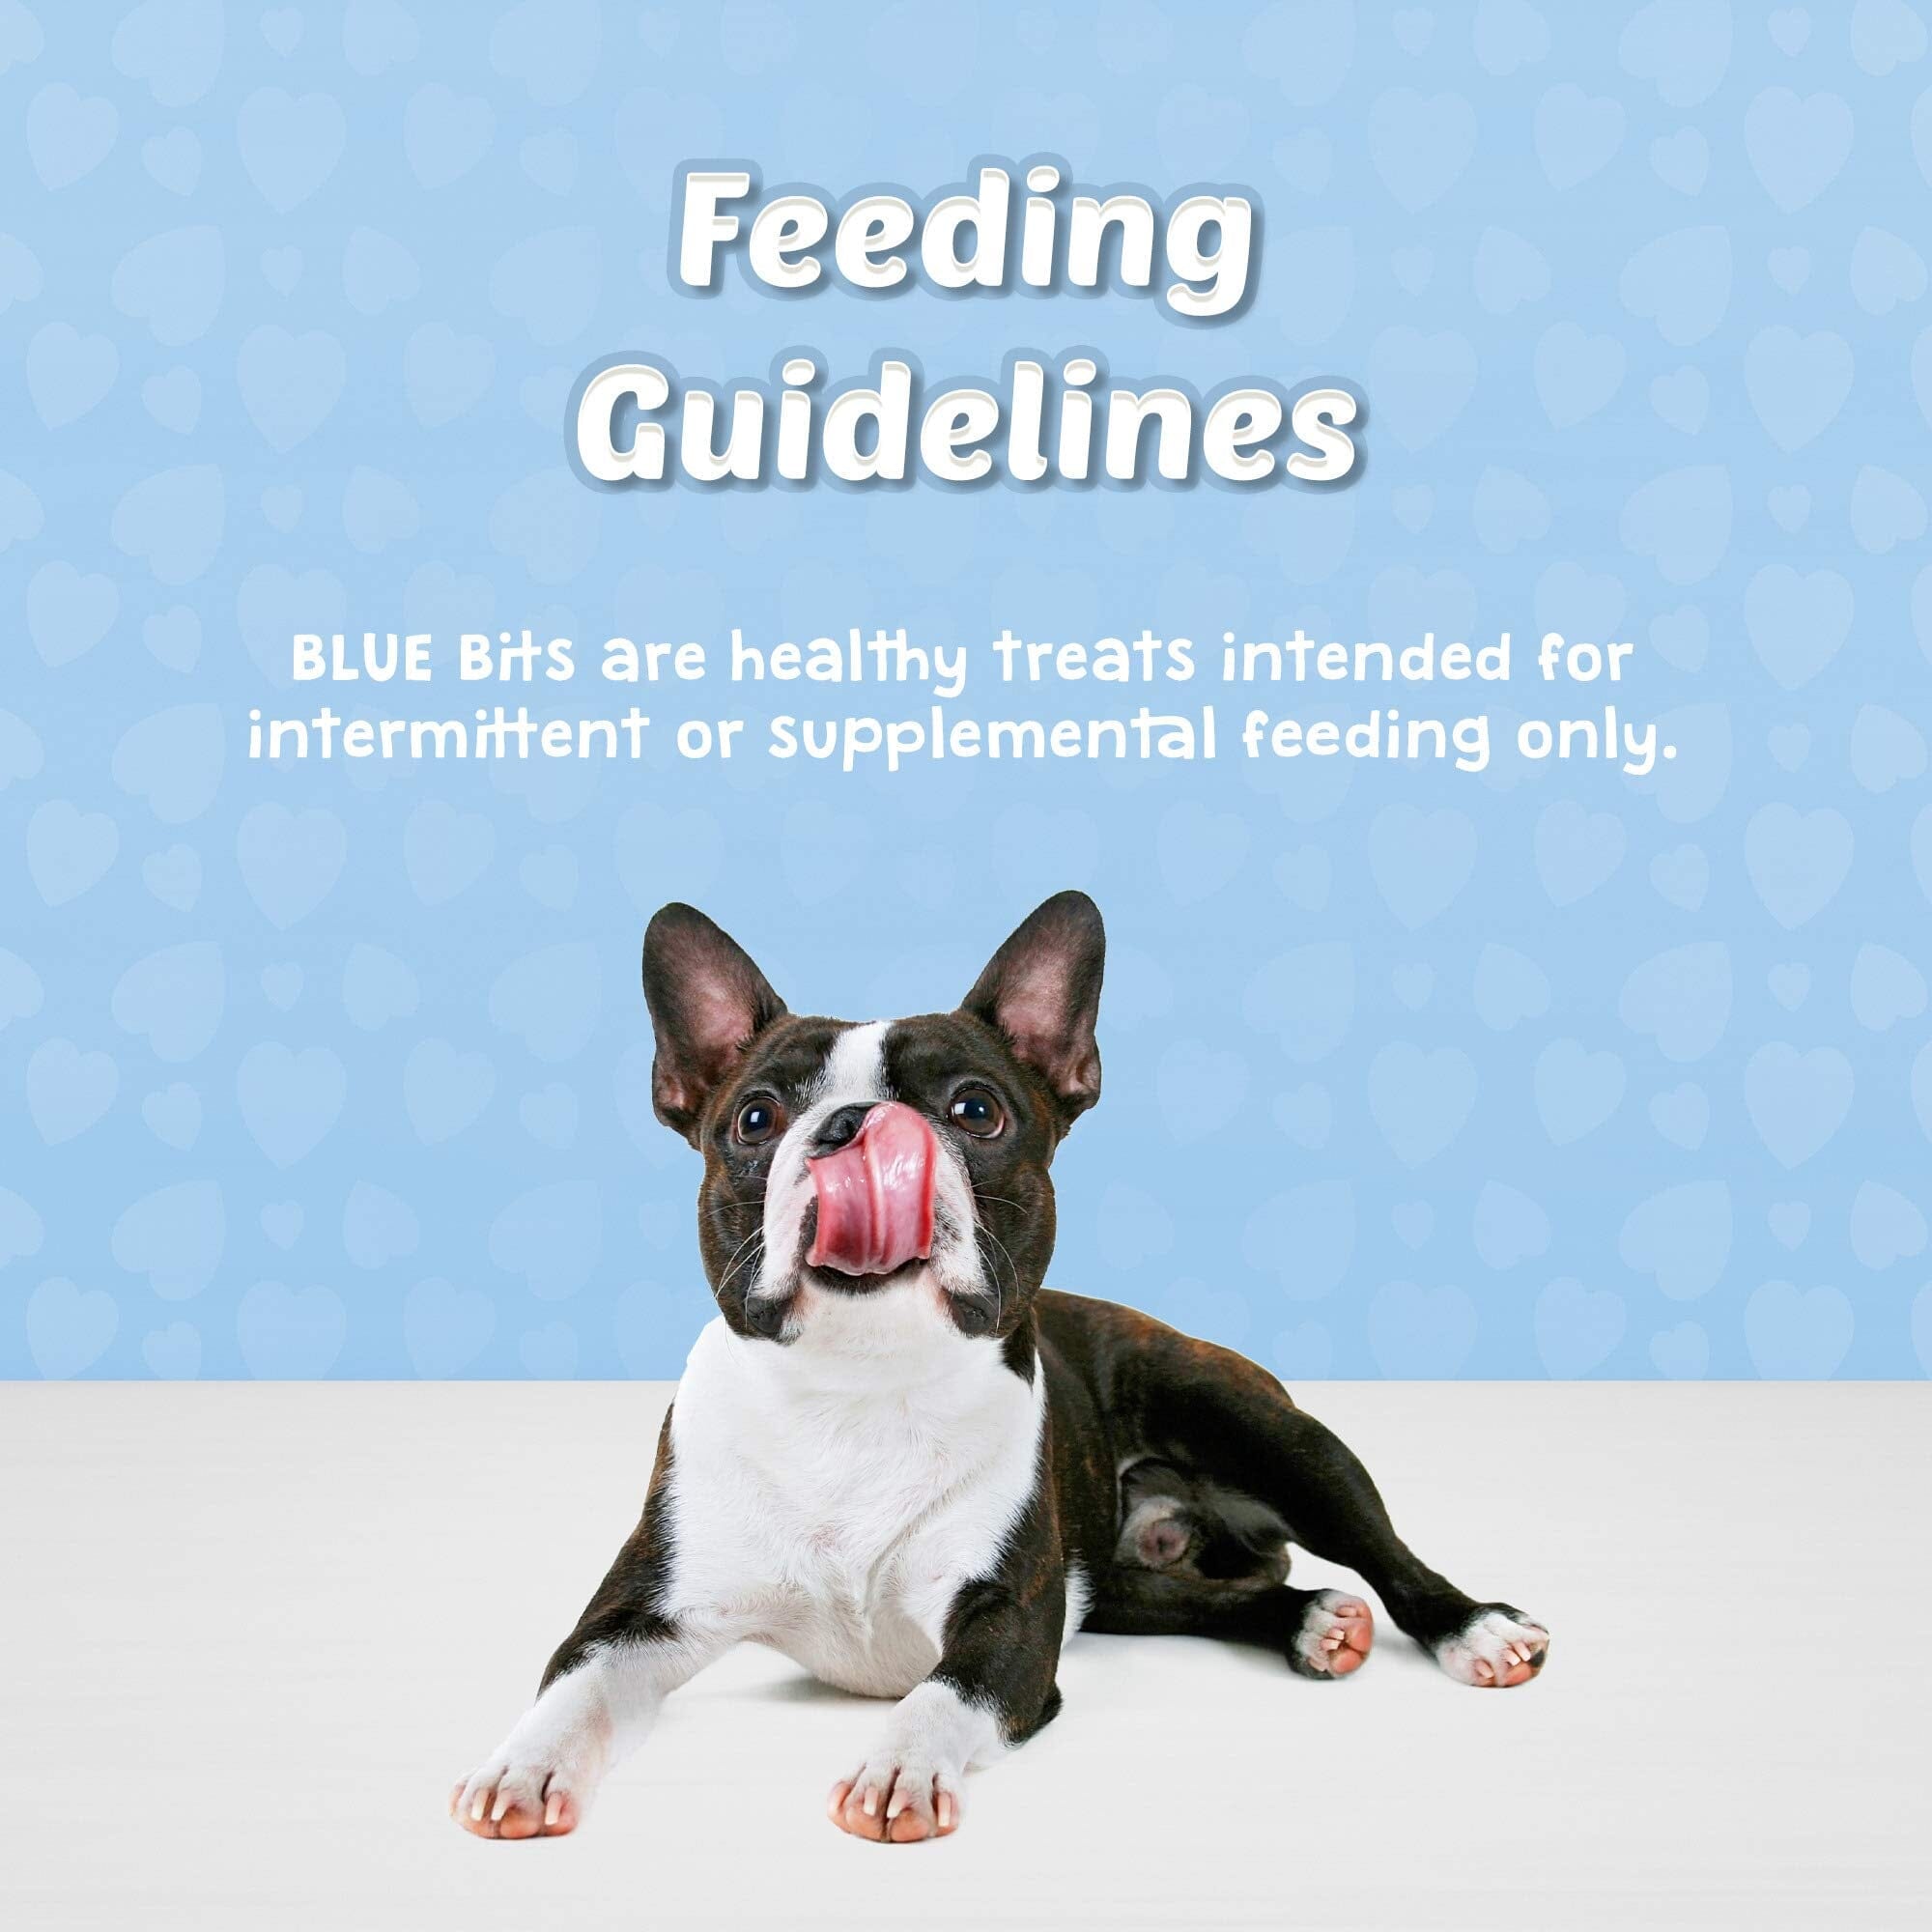 Blue Buffalo Blue Bits Tasty Salmon Moist Soft and Chewy Training Dog Treats - 4 Oz  